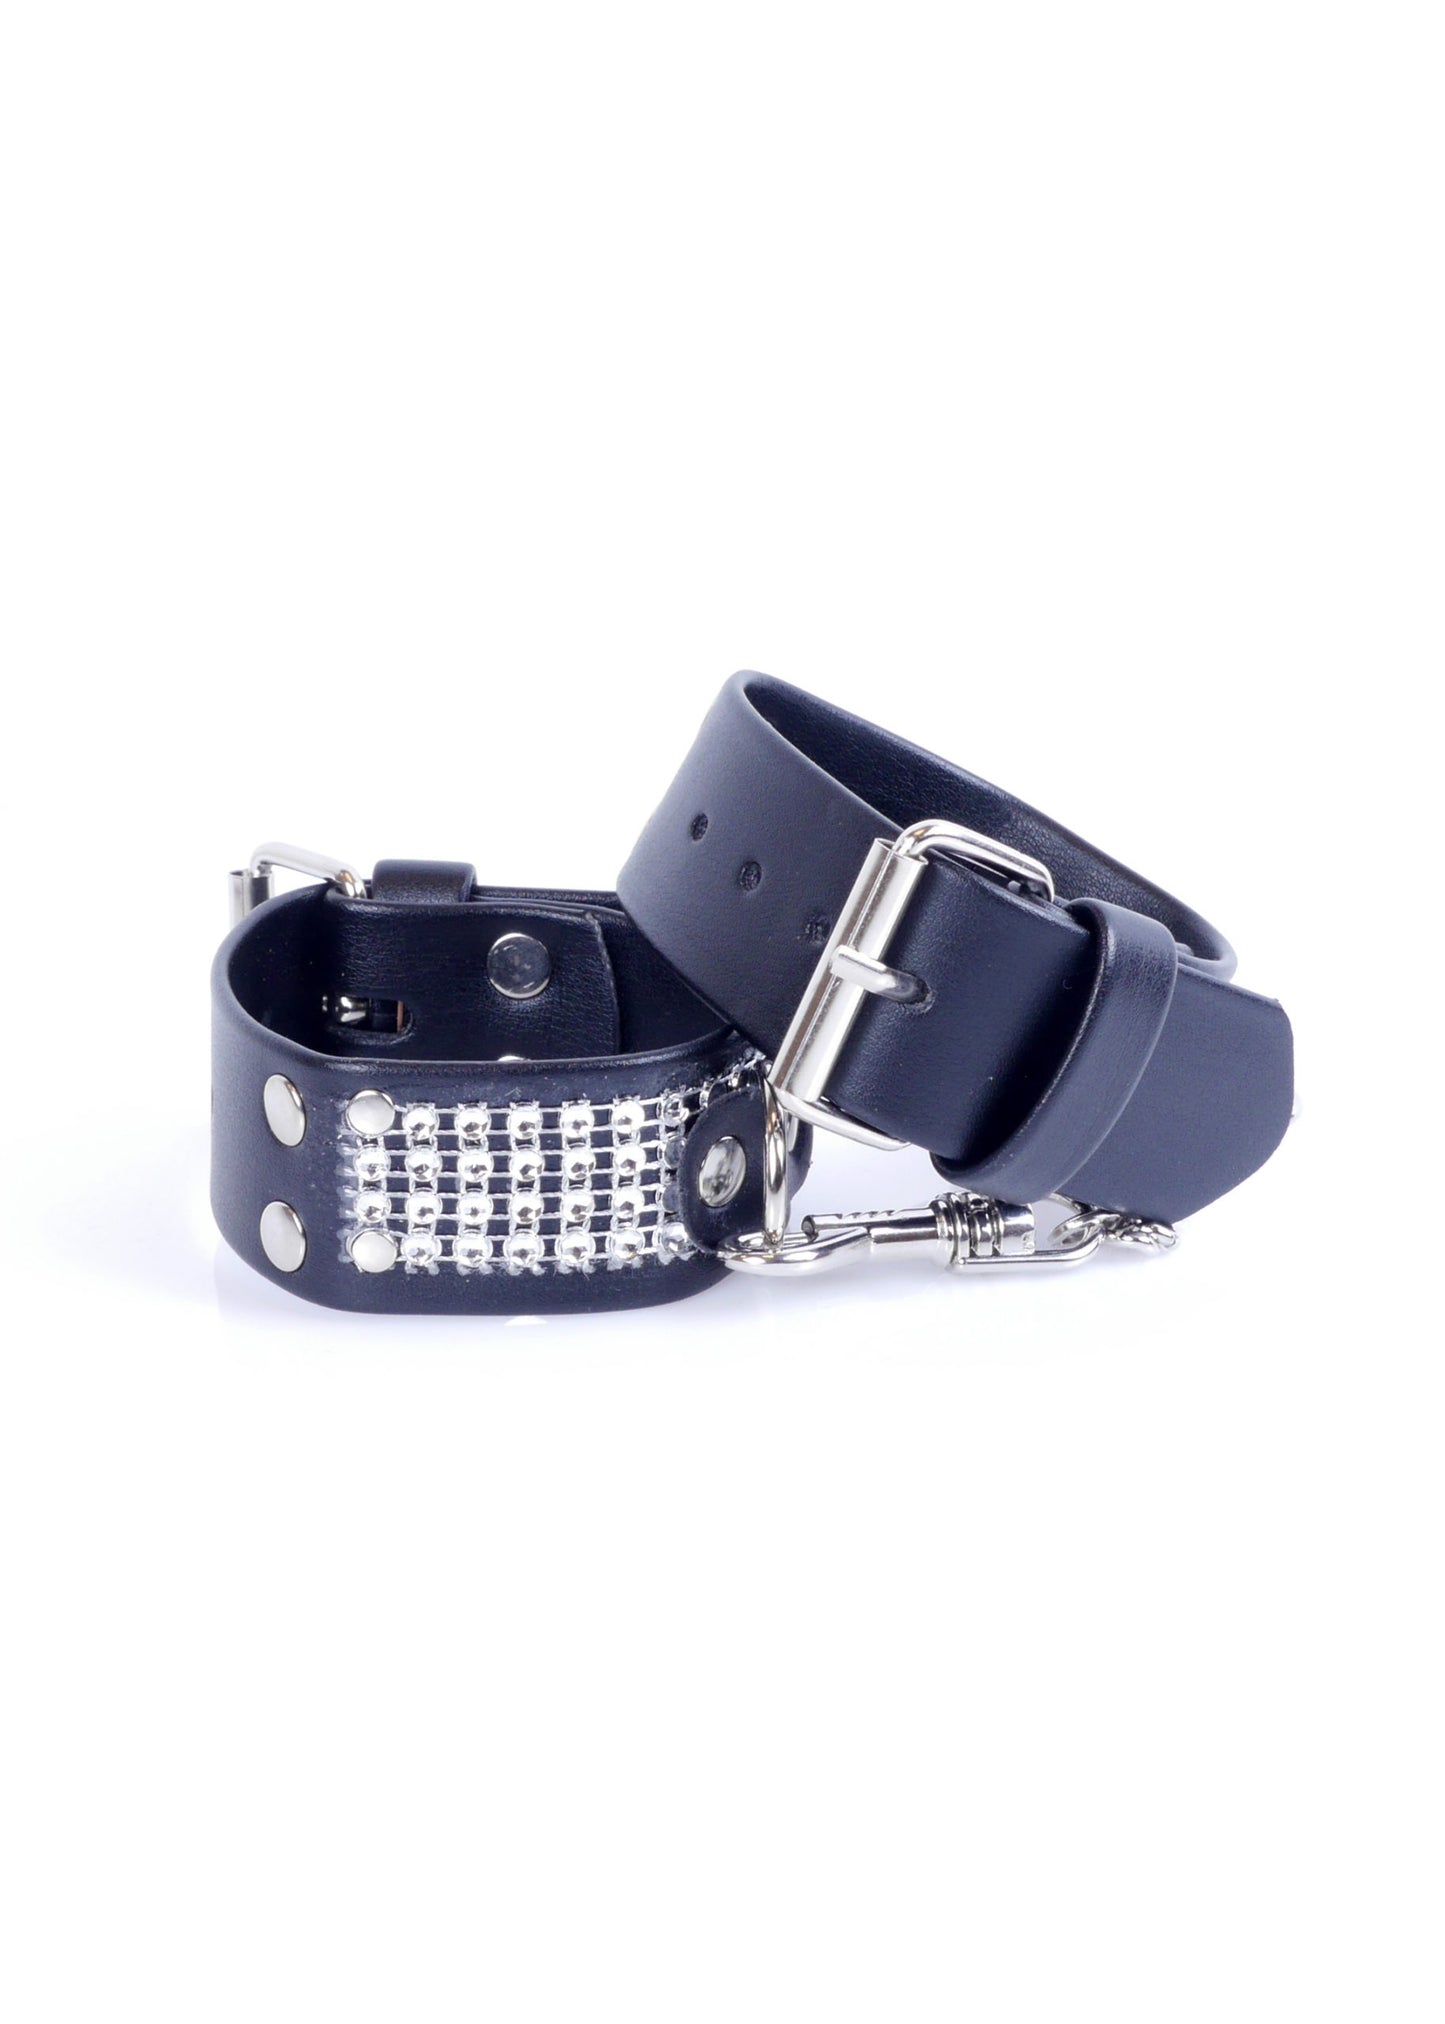 Bossoftoys - 33-00094 - Luxury Handcuffs - Wristcuffs with Diamond Stones - for Luxury Bondage games